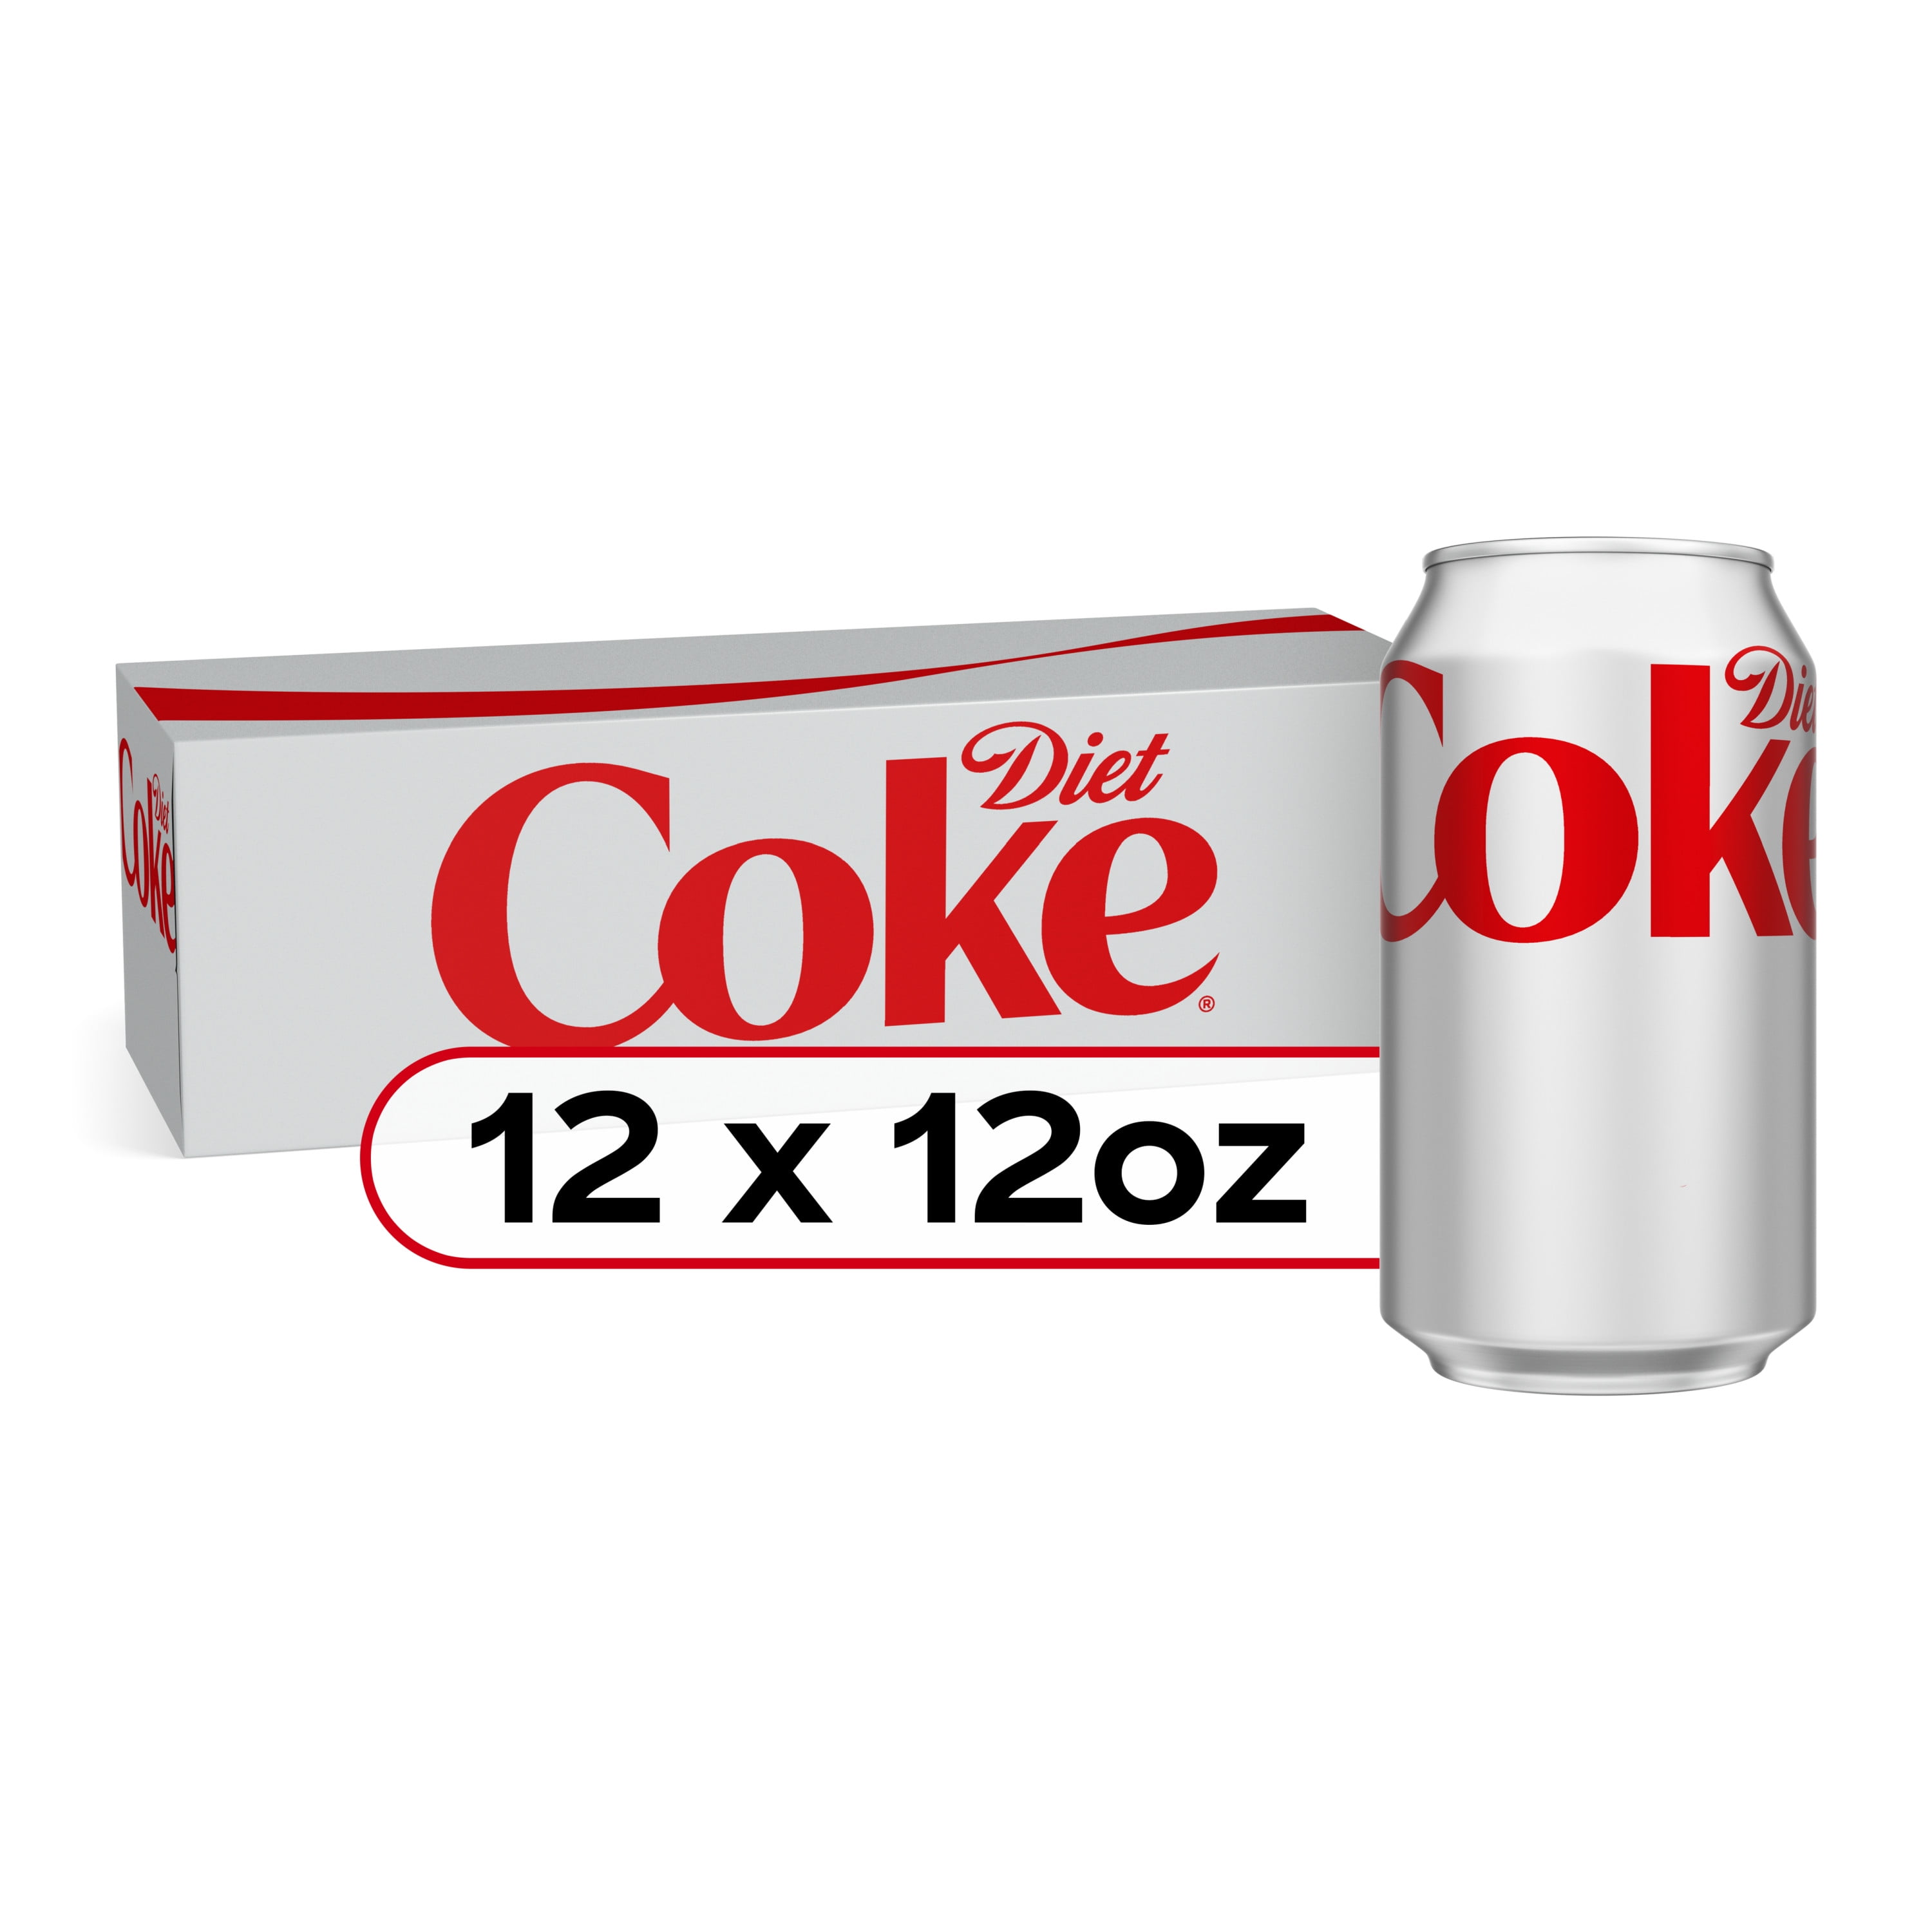 Moxie Diet Soda Pop, 12 fl oz, 12 Pack Cans 